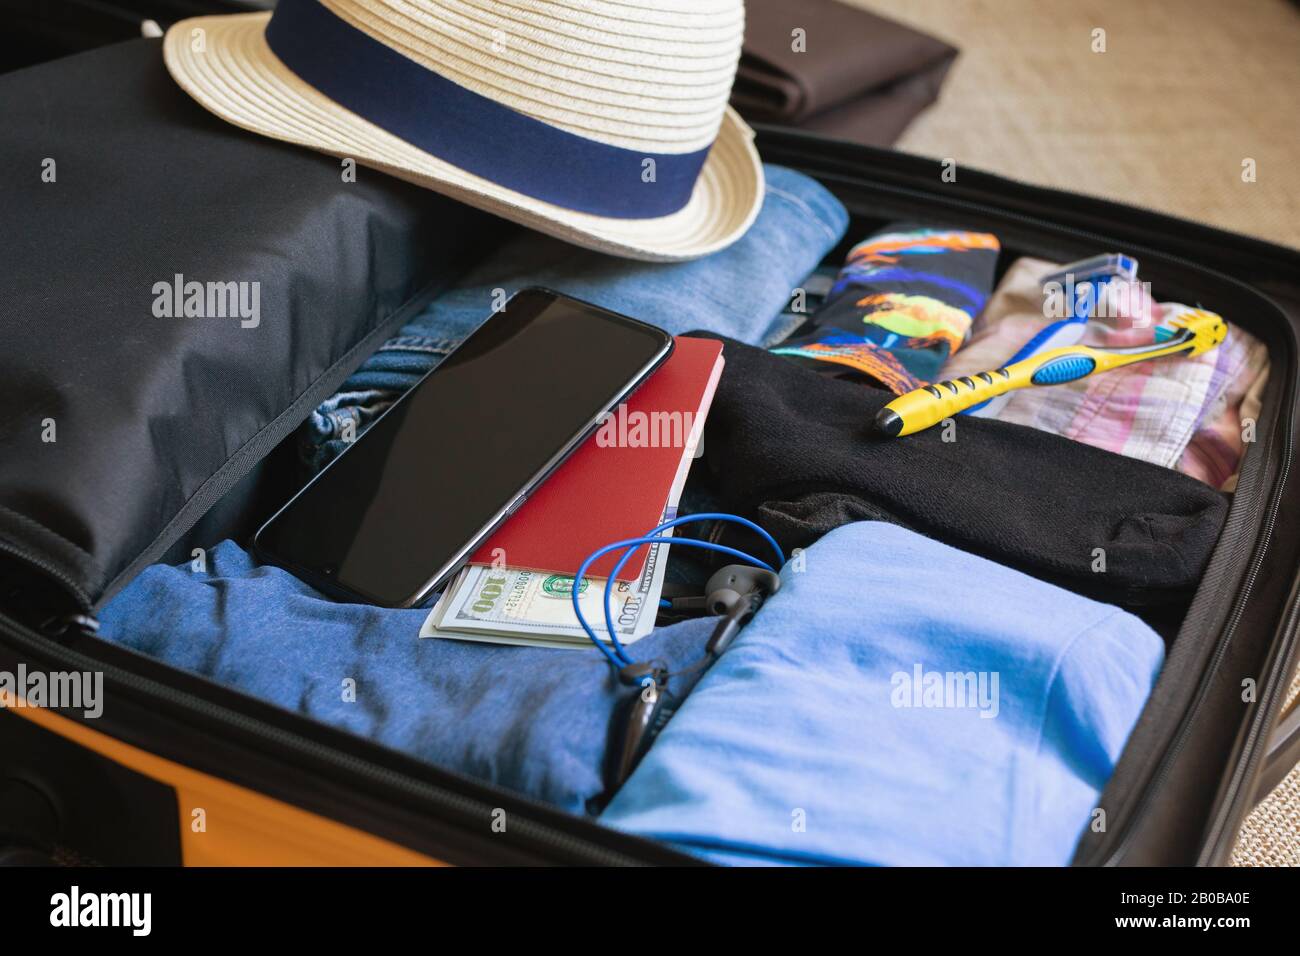 https://c8.alamy.com/comp/2B0BA0E/concept-preparation-for-trip-or-travel-open-suitcase-with-mens-clothing-2B0BA0E.jpg